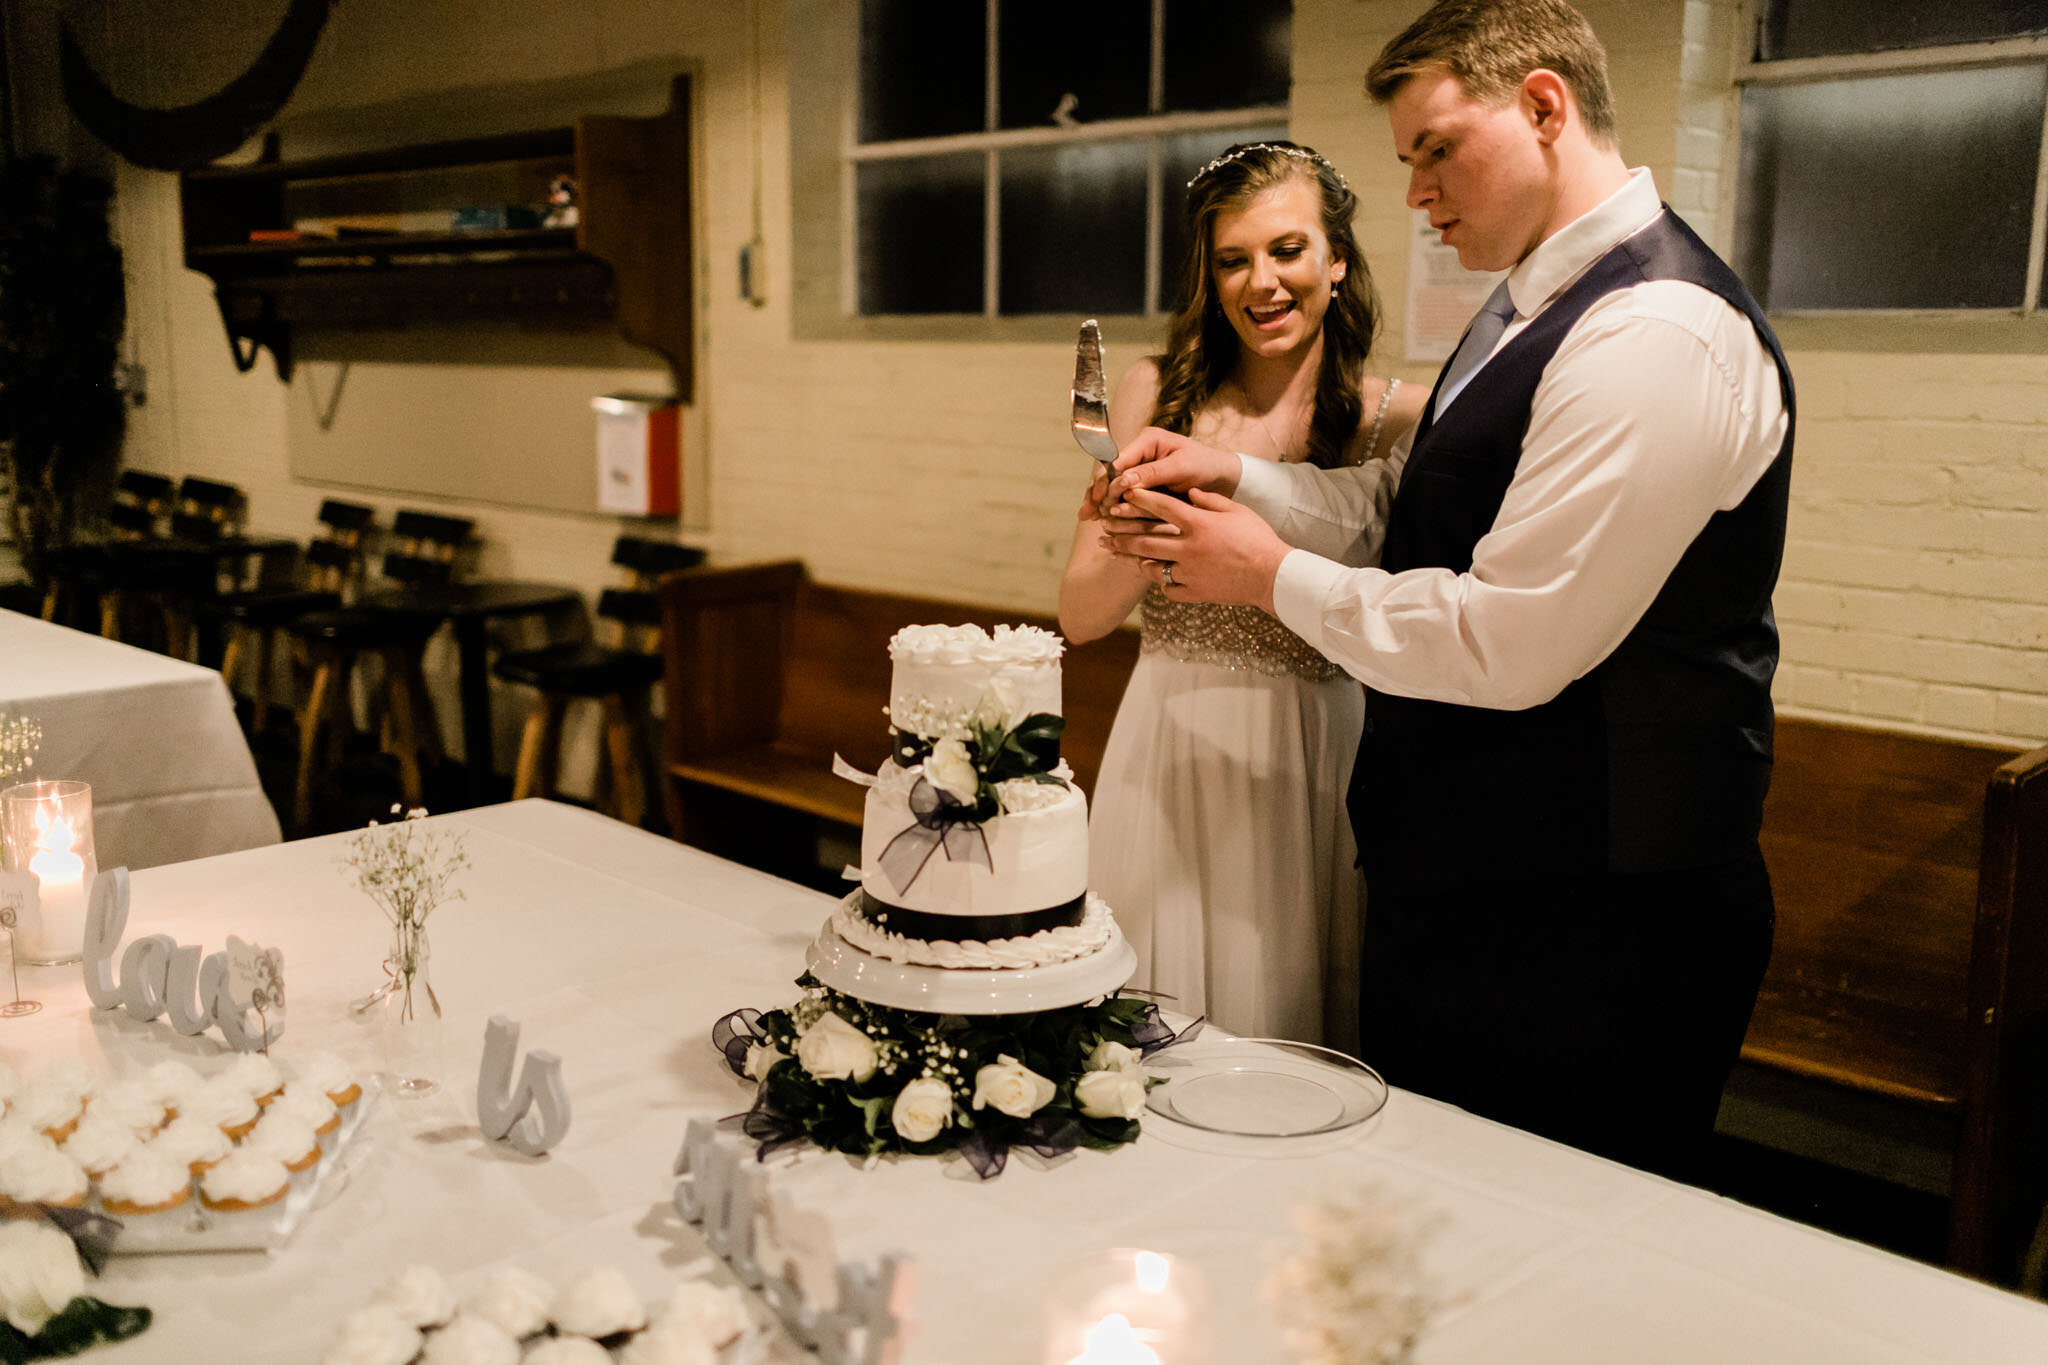 Durham Wedding Photographer | By G. Lin Photography | Bride and groom cutting wedding cake